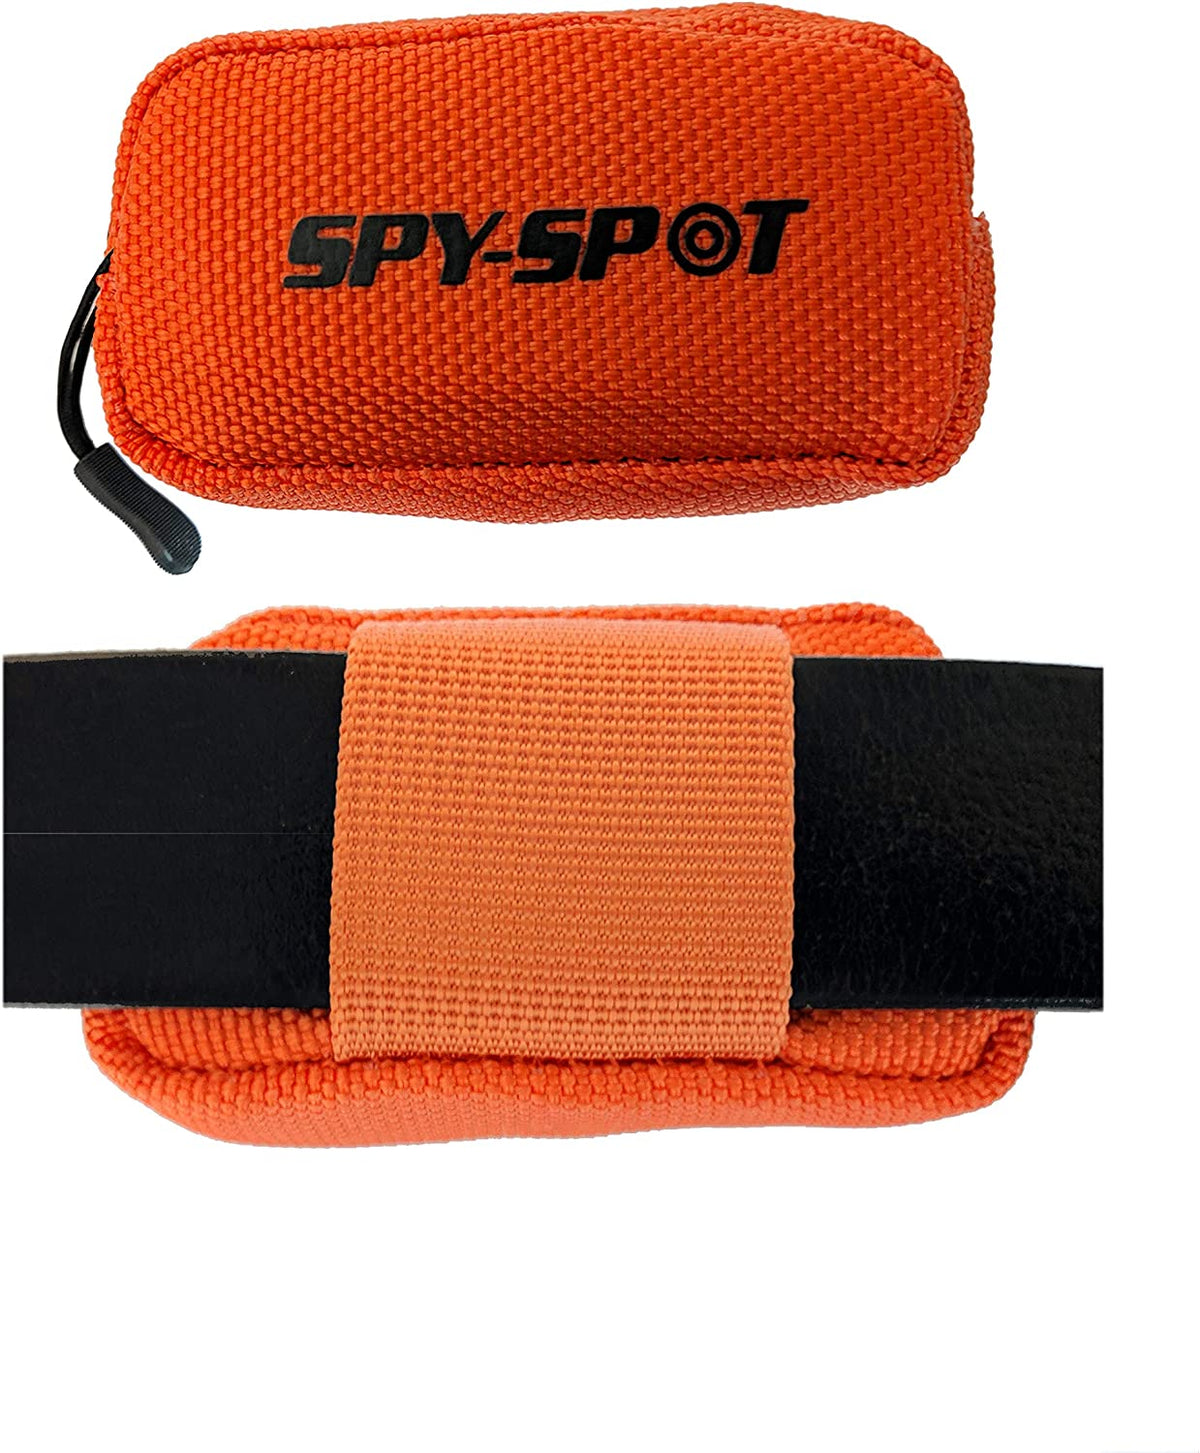 Spy Spot Waterproof Small Pouch -  GPS Tracker Case, Dog Collar Pouch